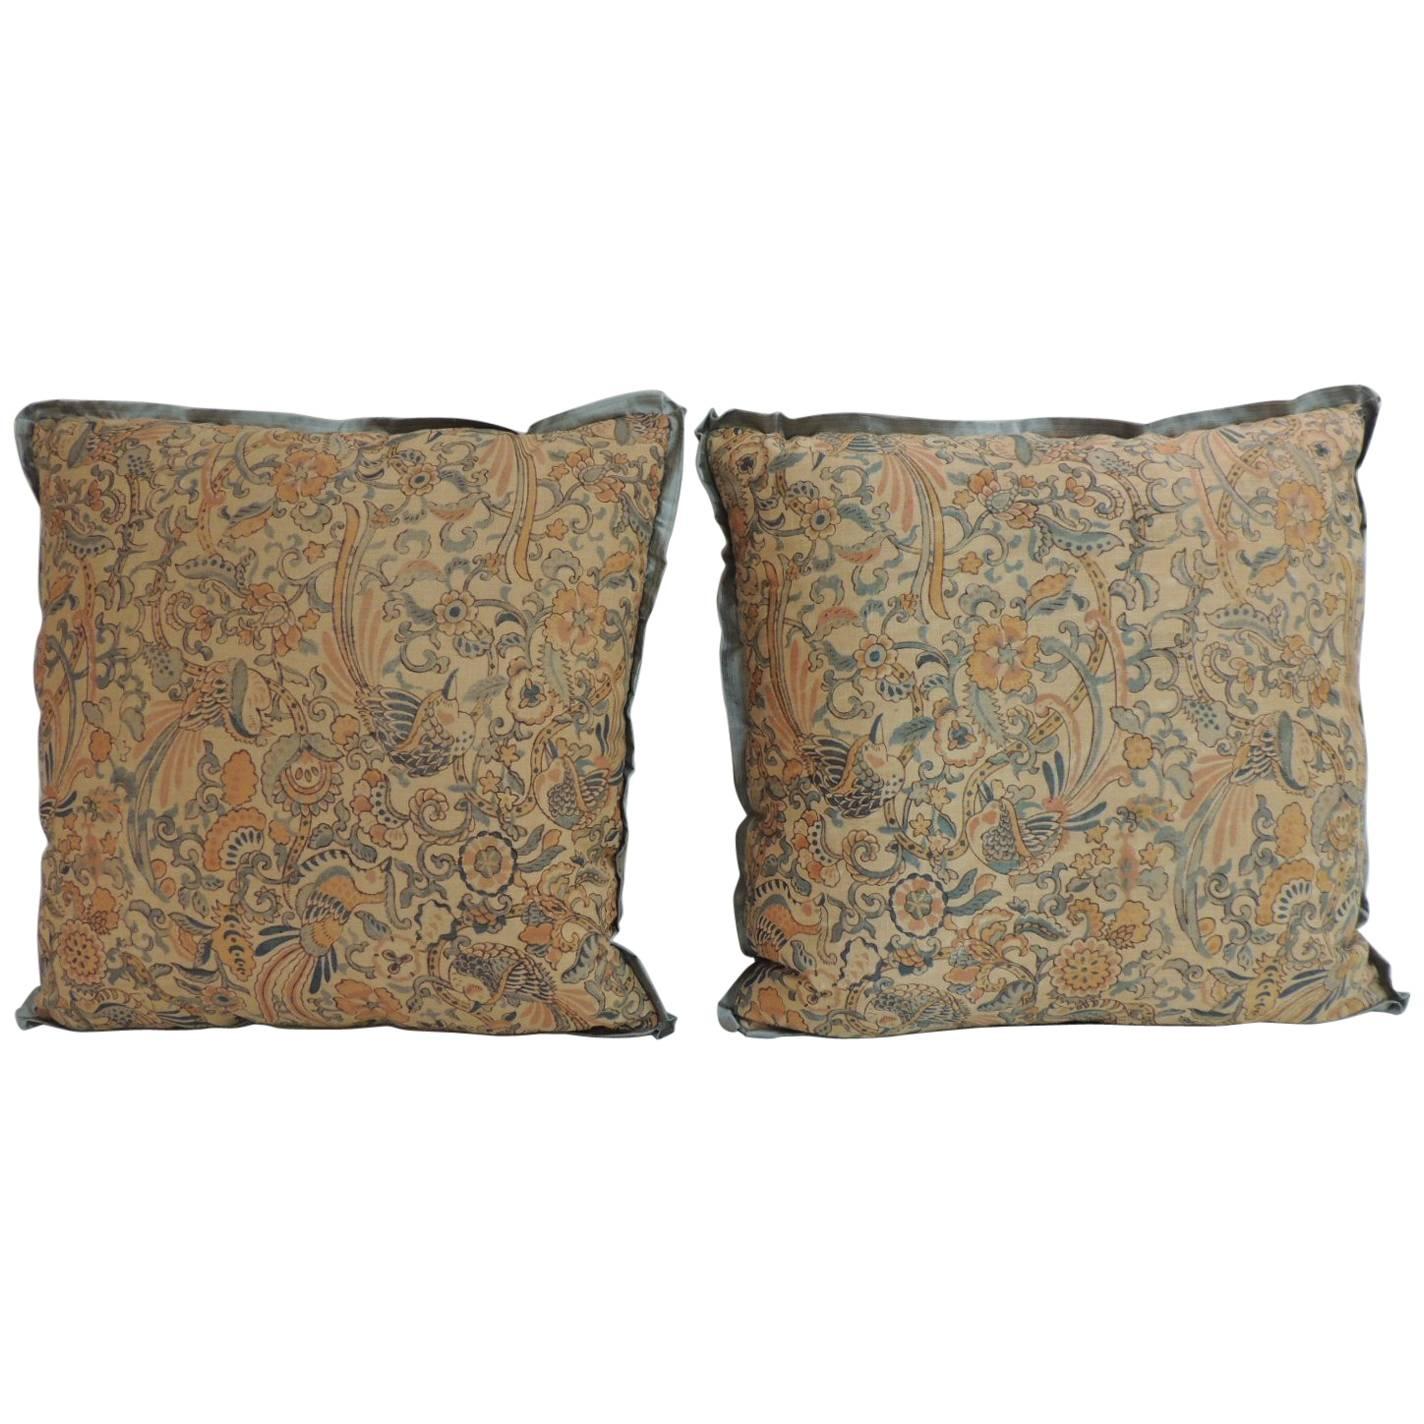 Pair of 19th Century Arts & Crafts English Printed Linen Decorative Pillows